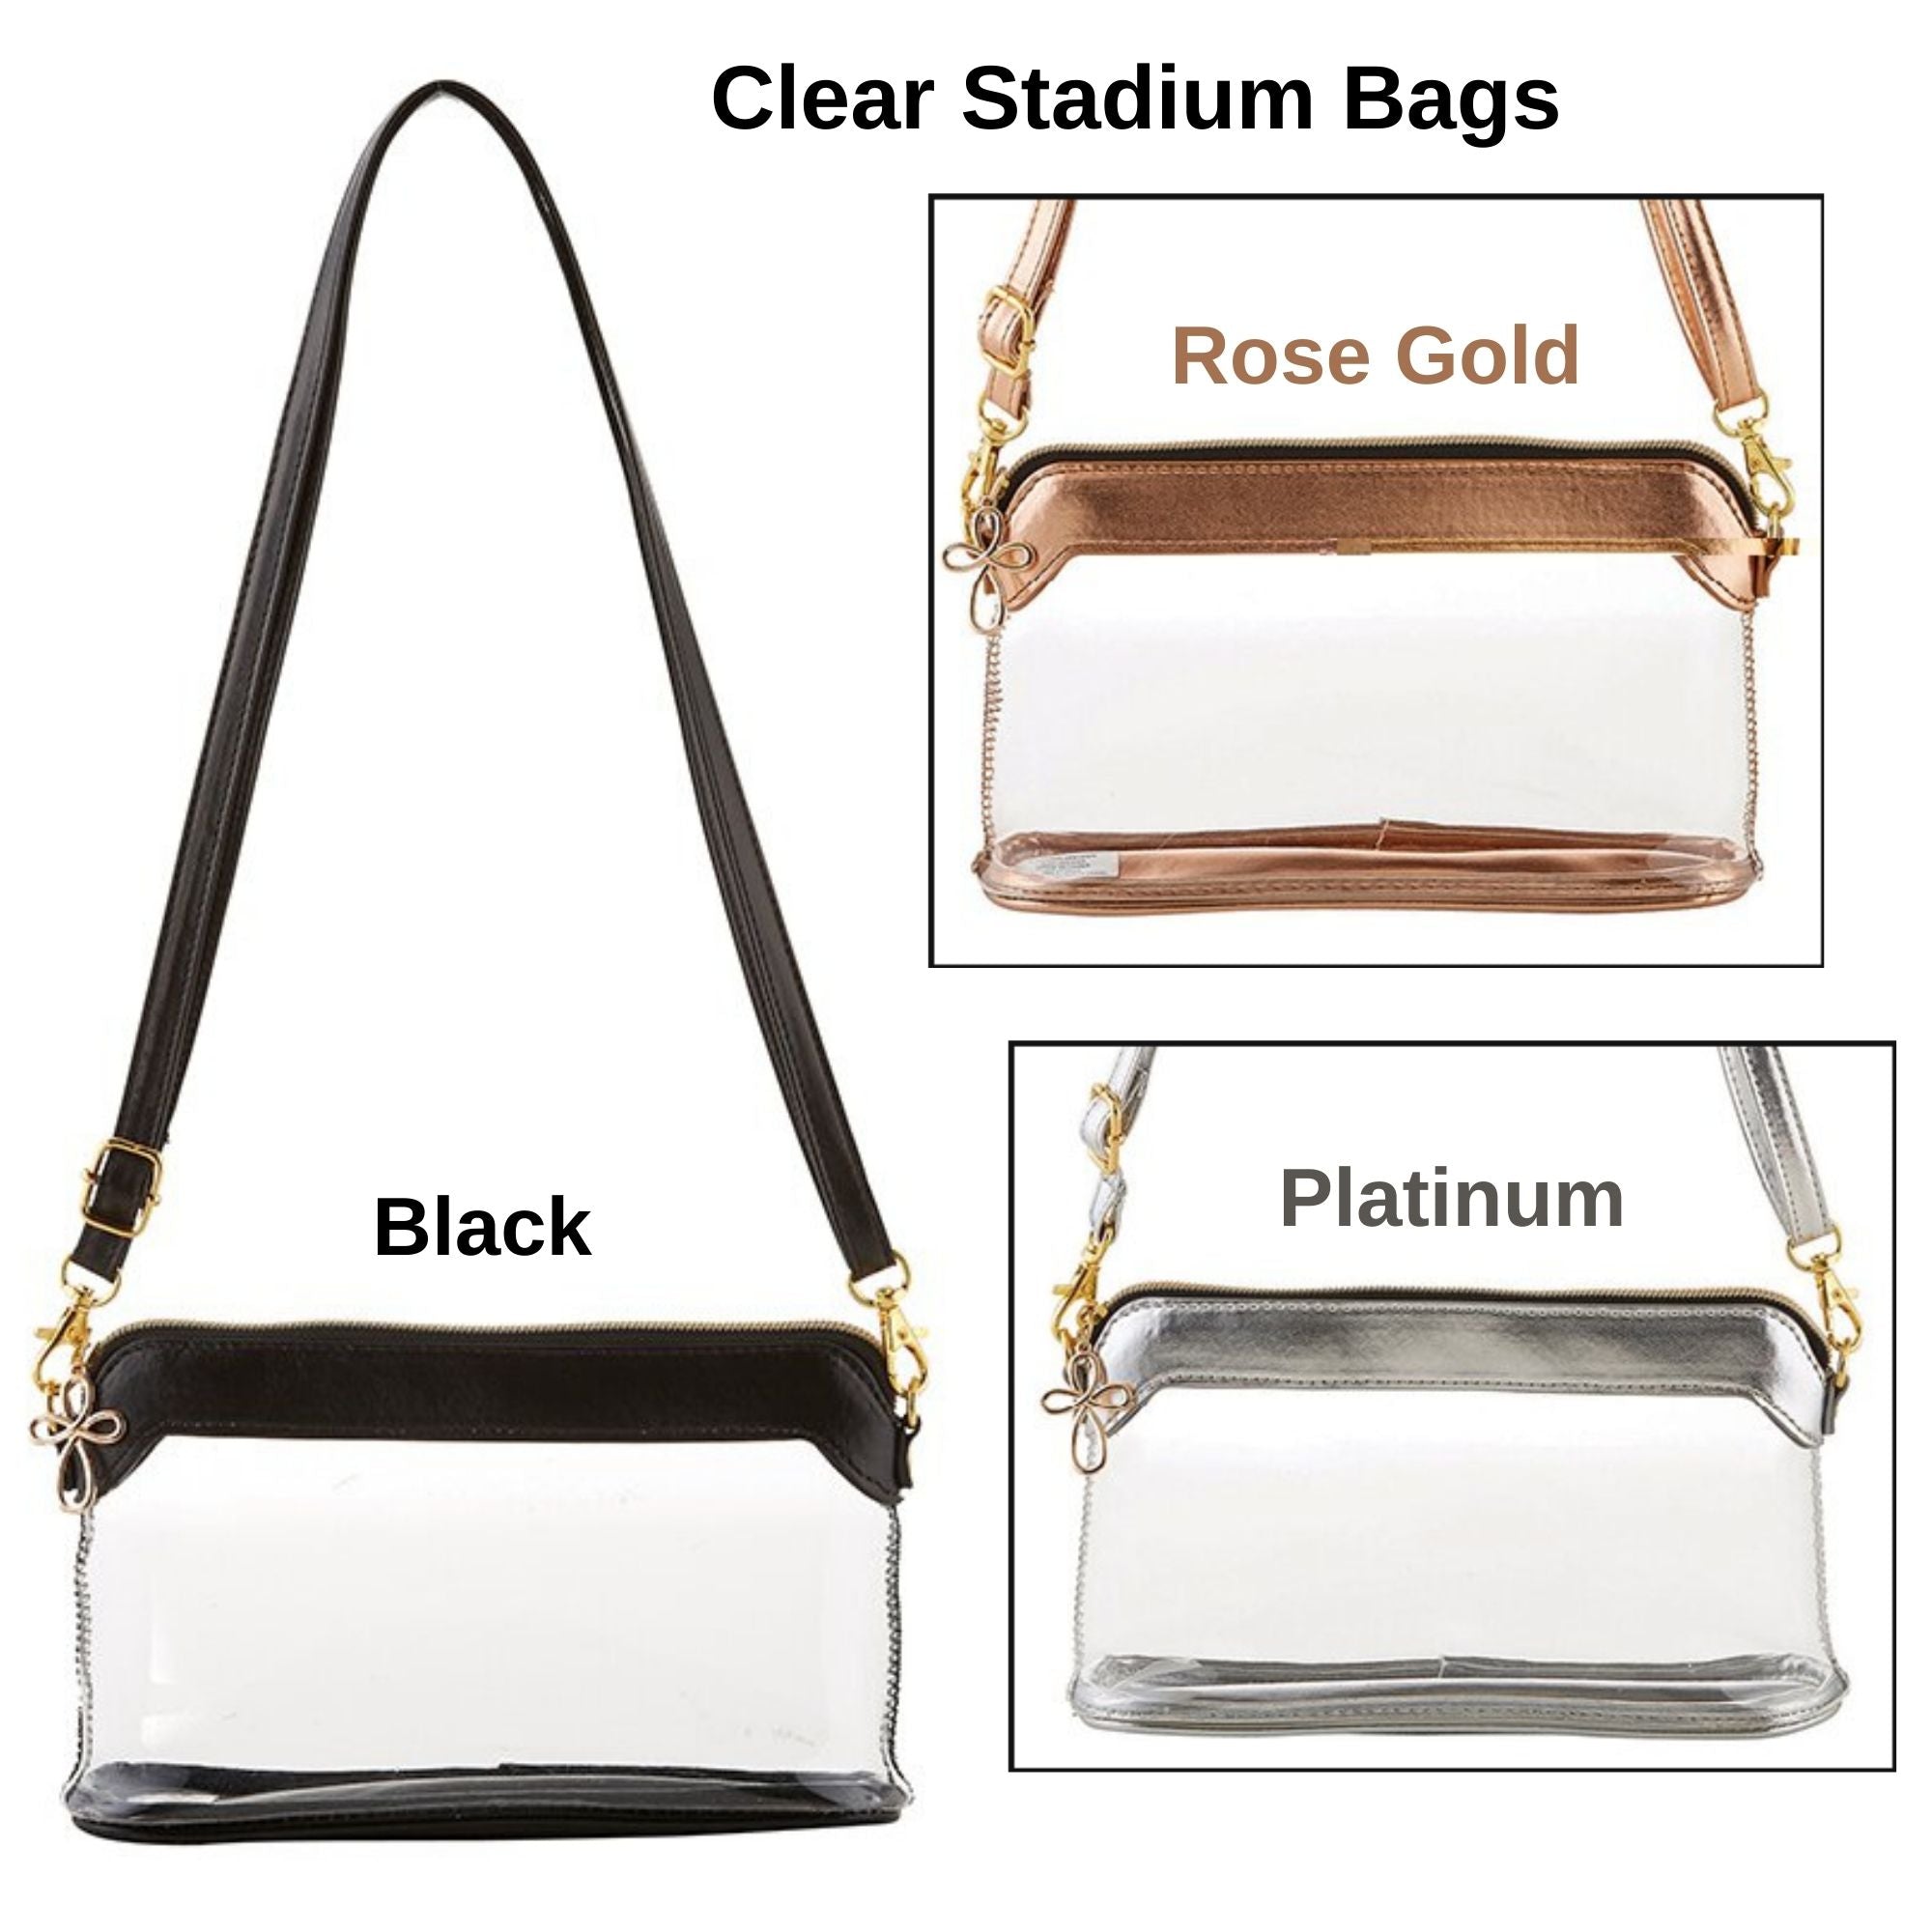 Love clear handbags!